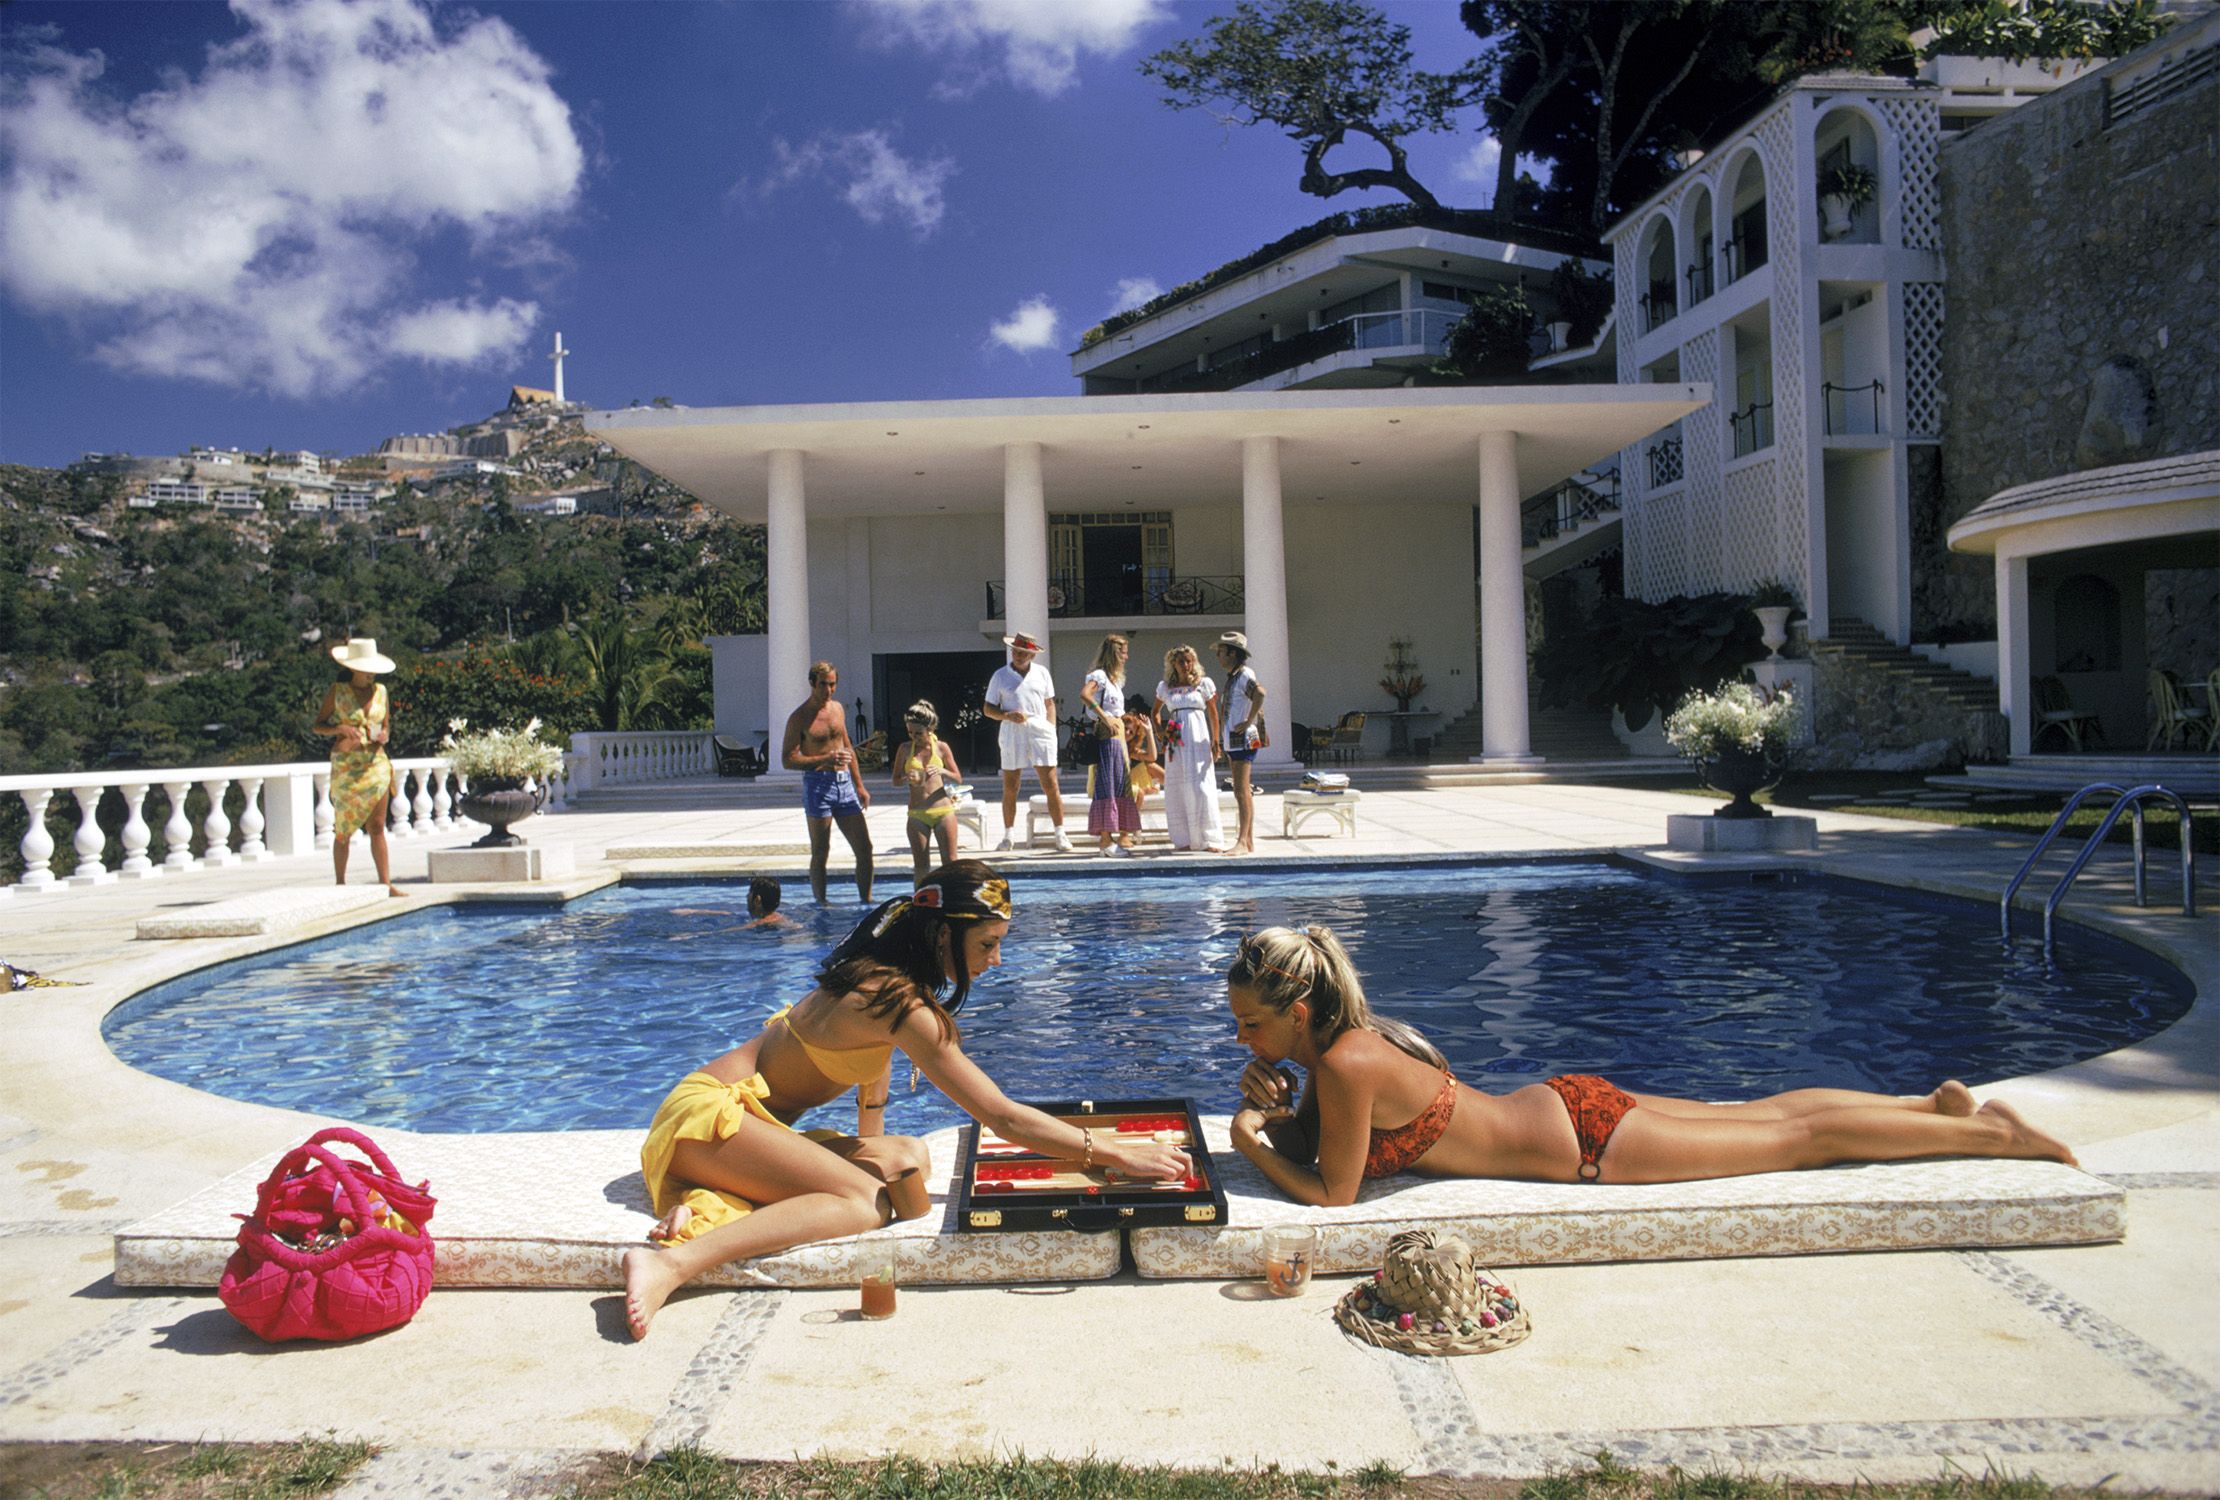 Nikki Beach Barbados is a one-stop resort phenomenon, British GQ